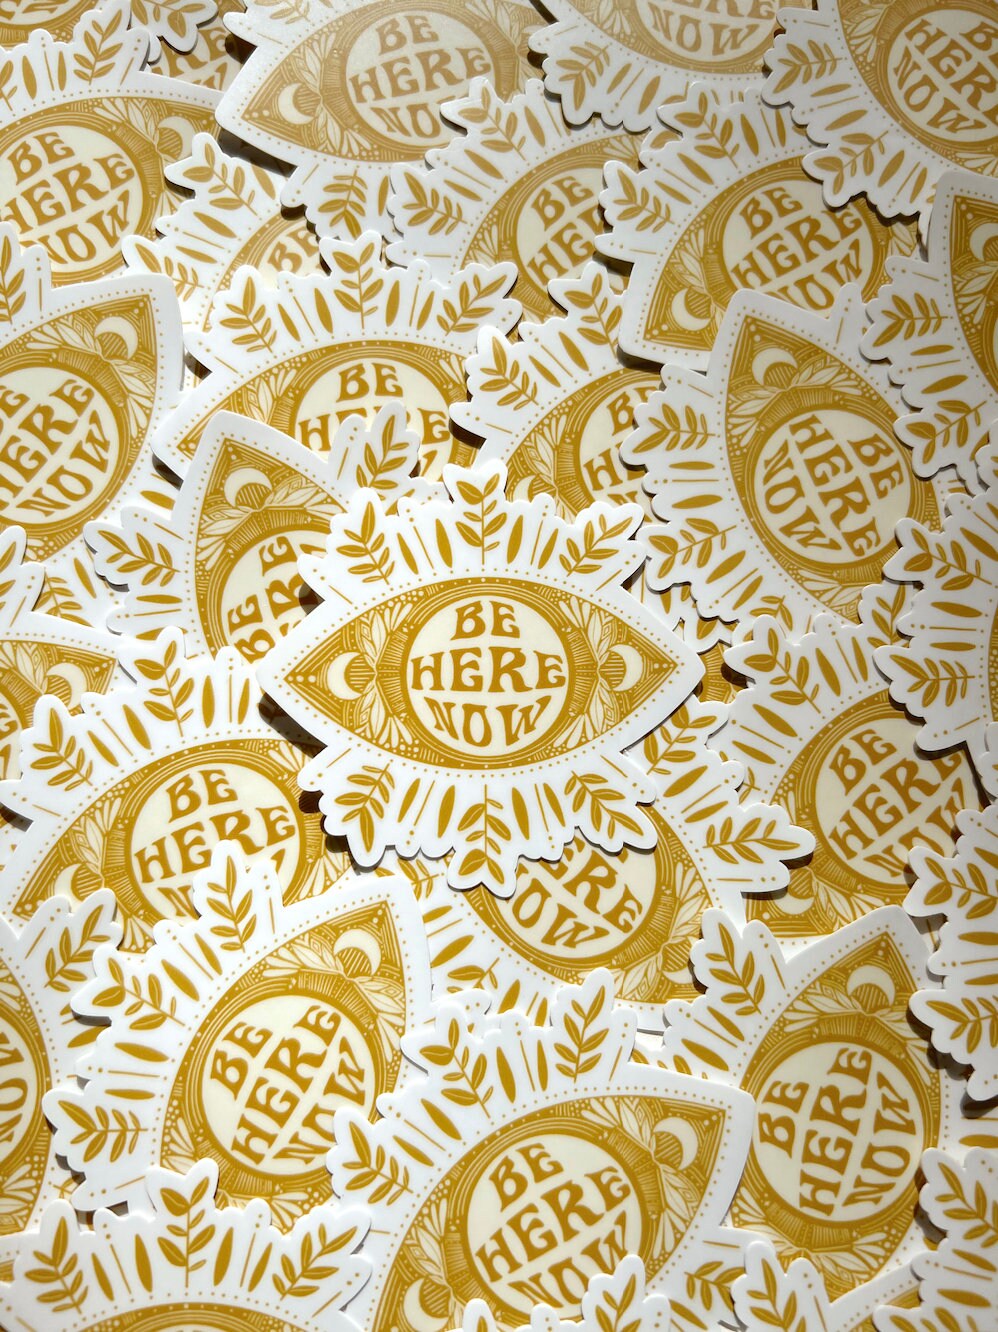 Be Here Now - Yellow Vinyl Sticker